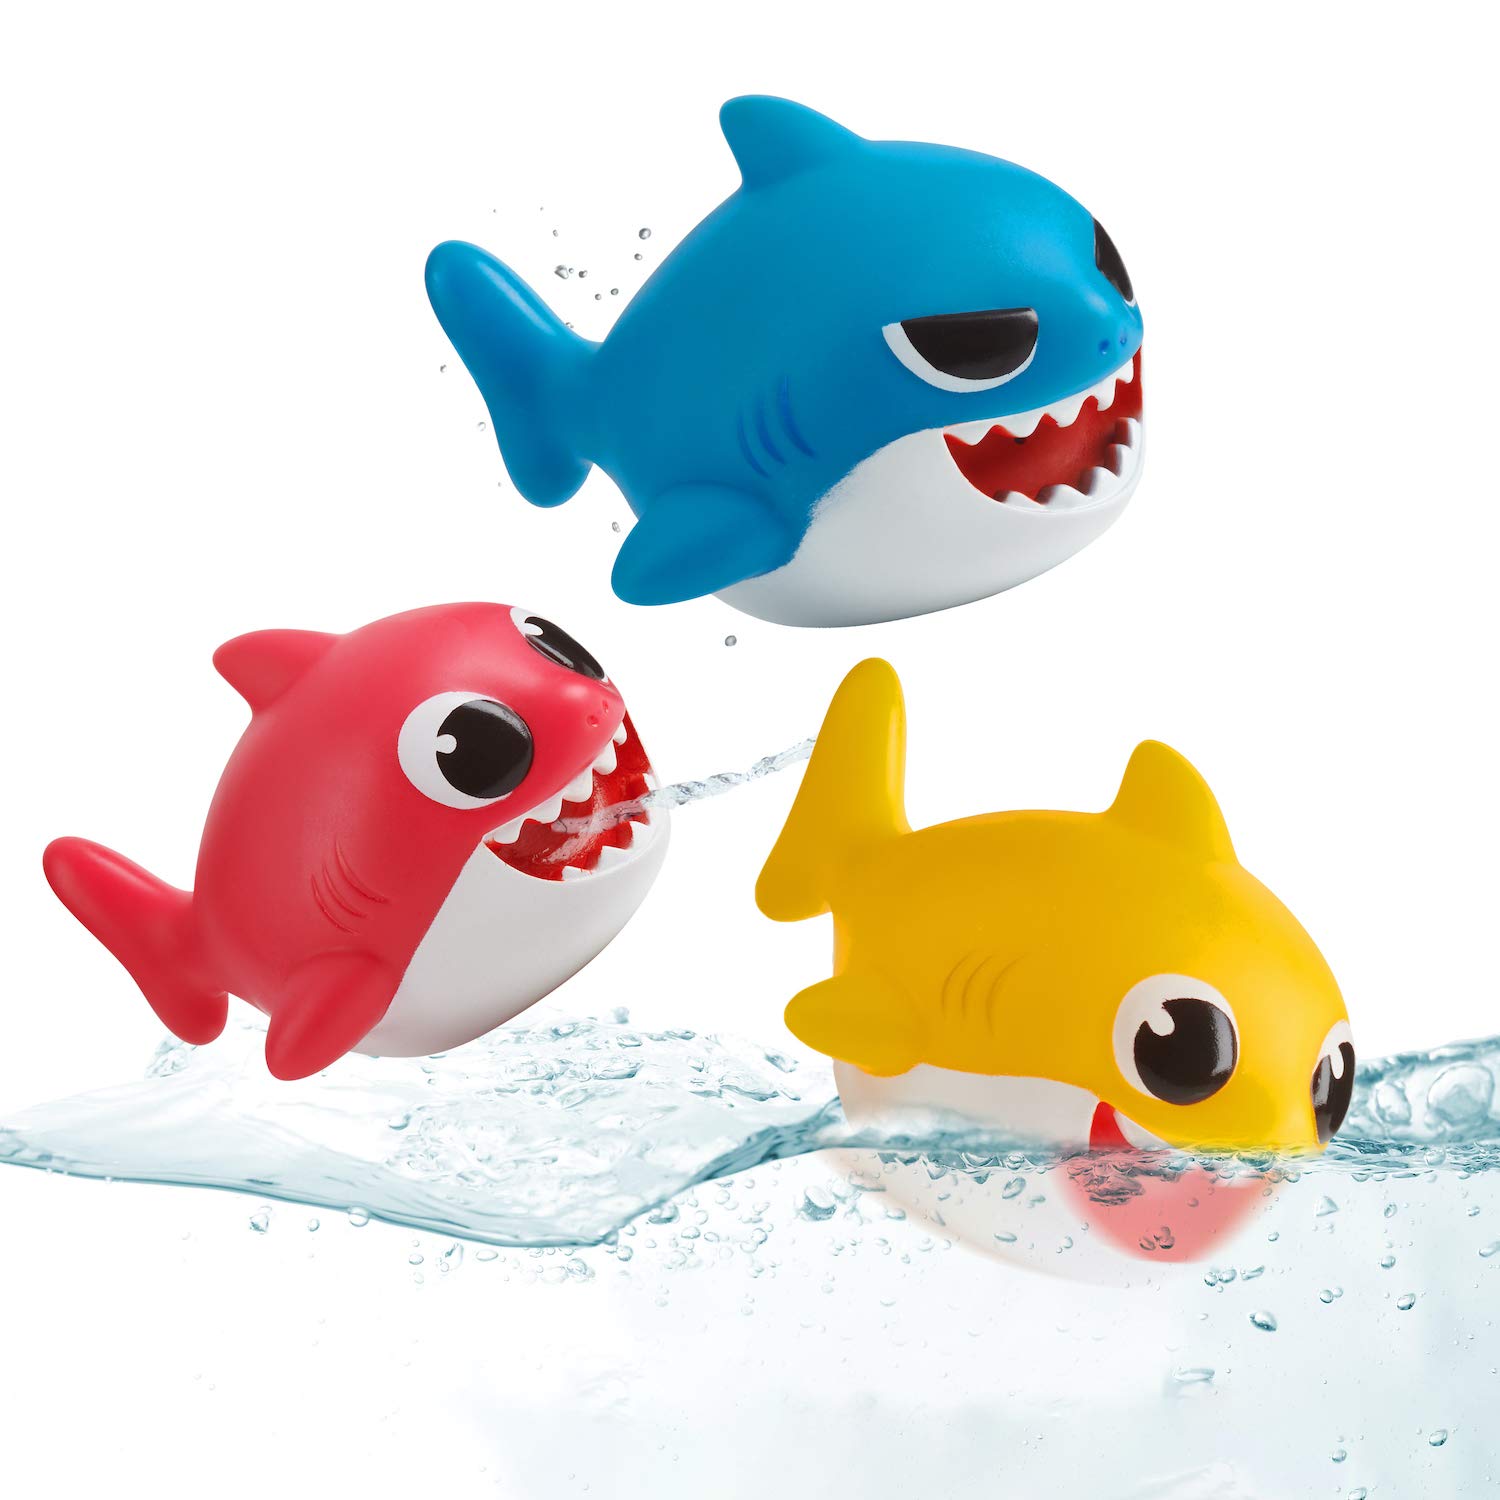 Pinkfong Baby Shark Official - Bath Toy Bundle (Amazon Exclusive)